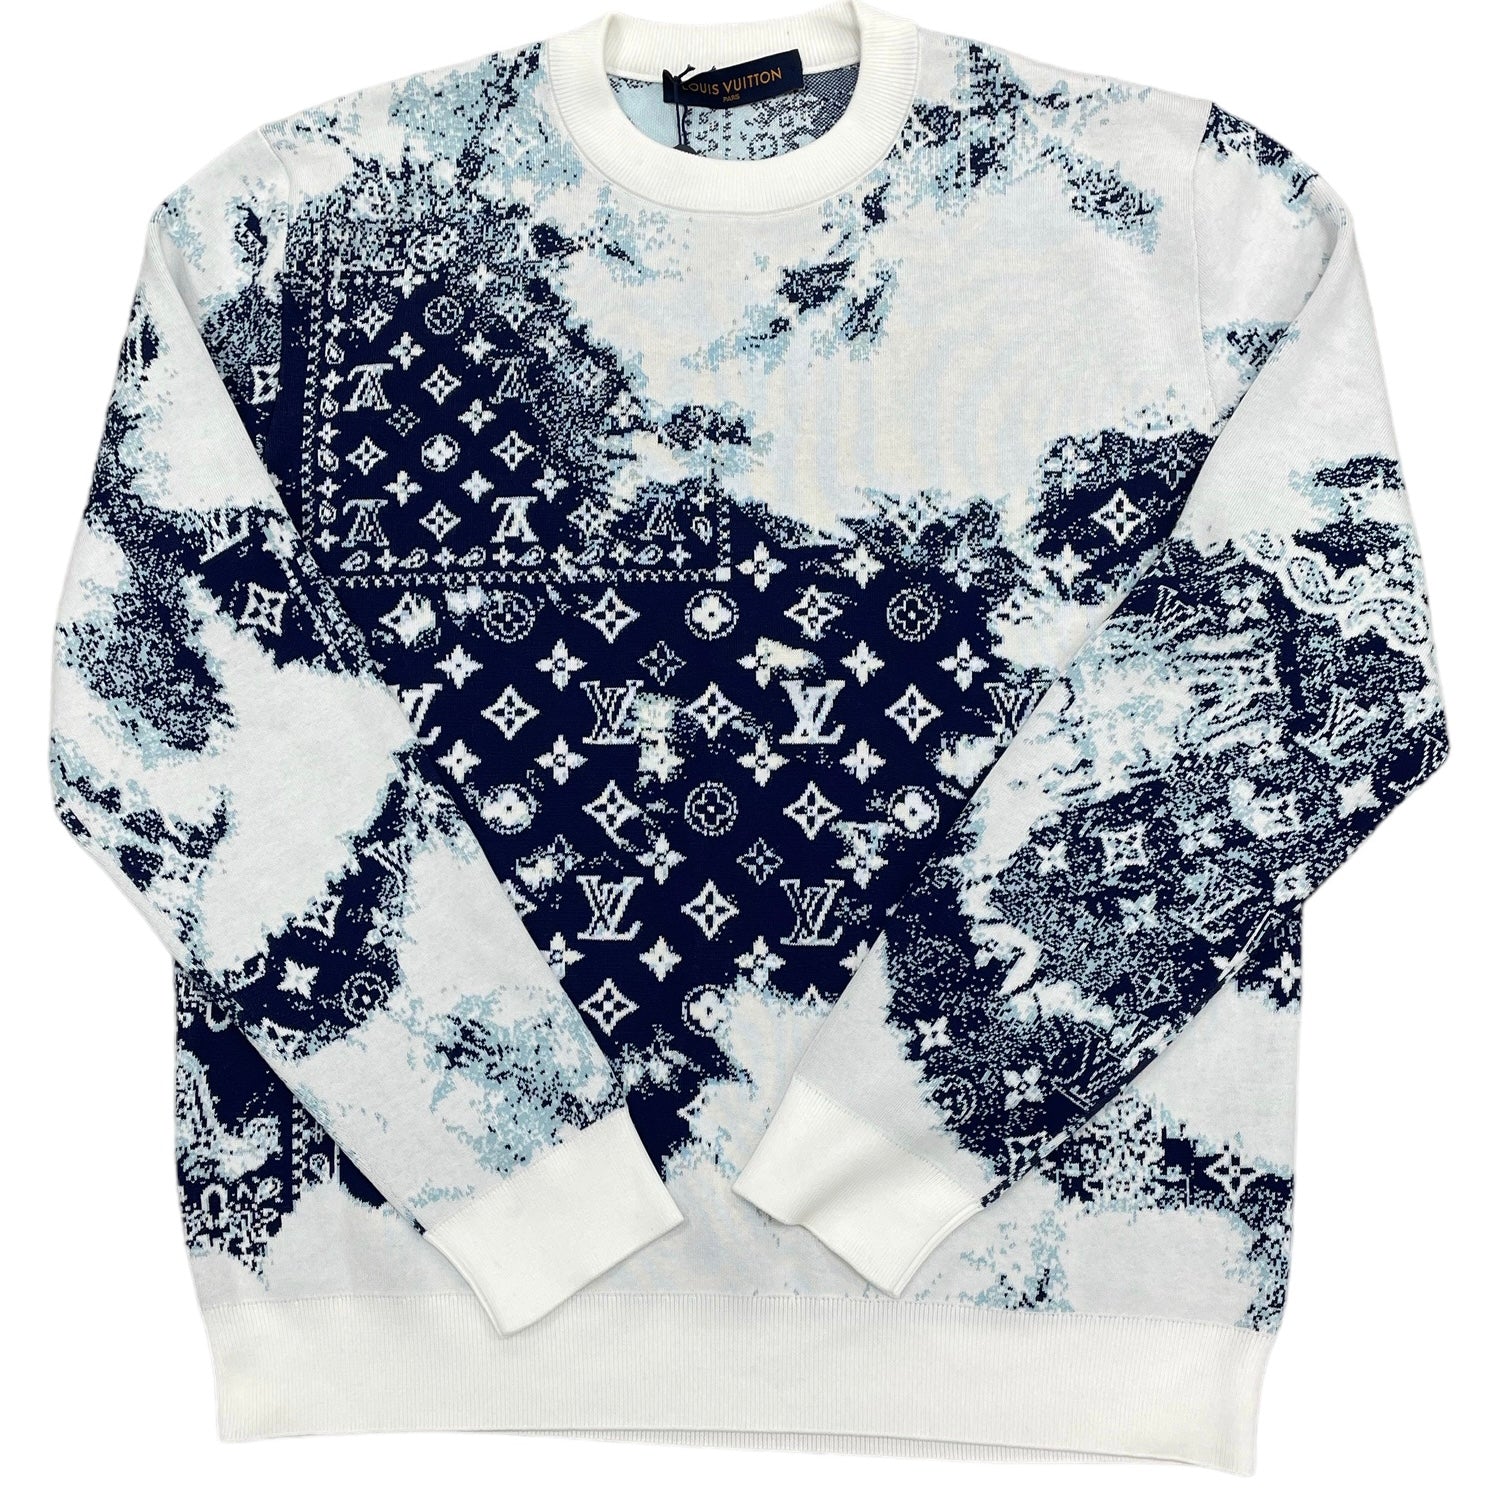 Hoodies & Sweatshirts – Divine Fashion